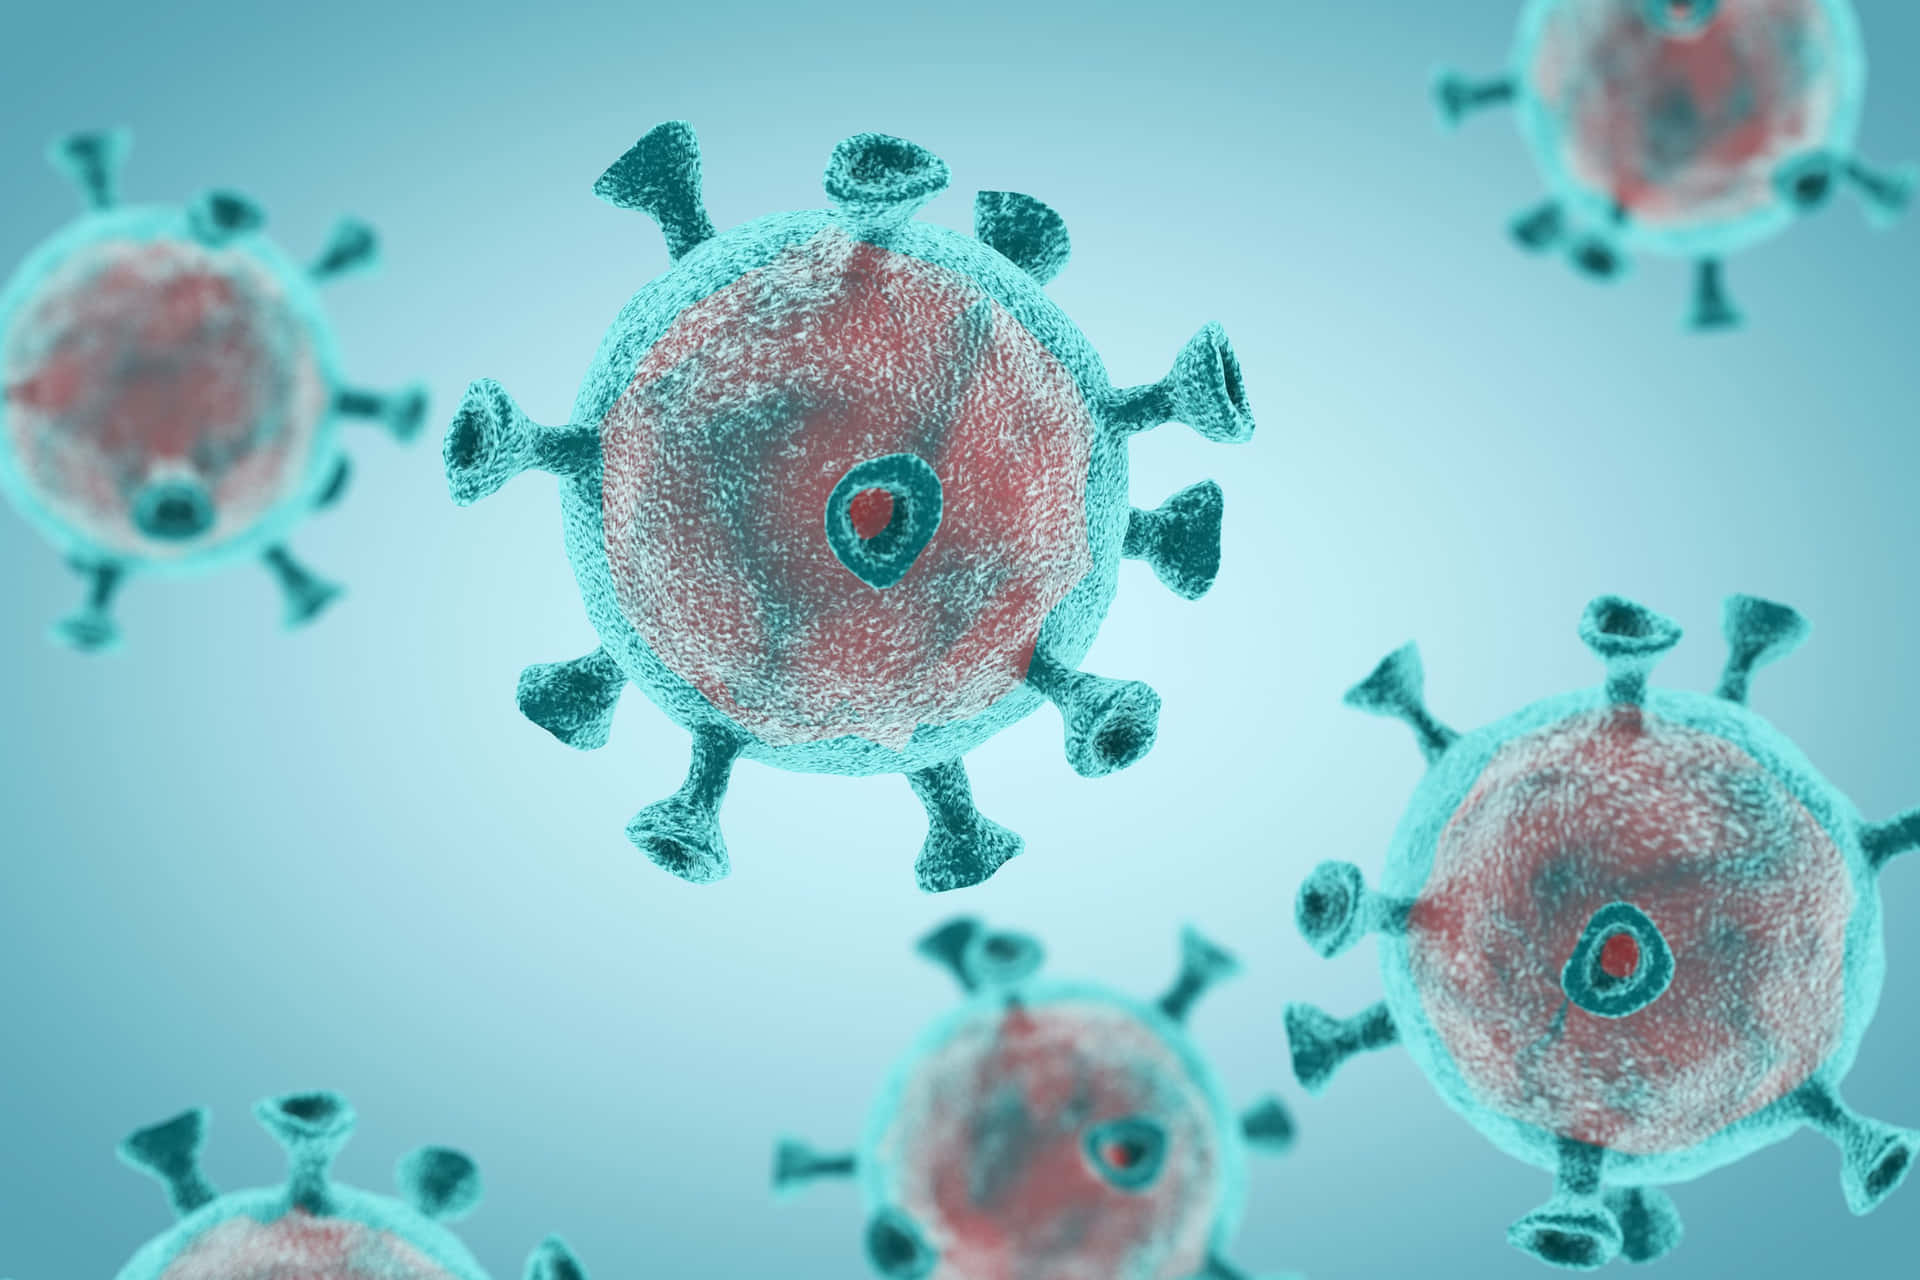 Coronavirus Close-Up Image